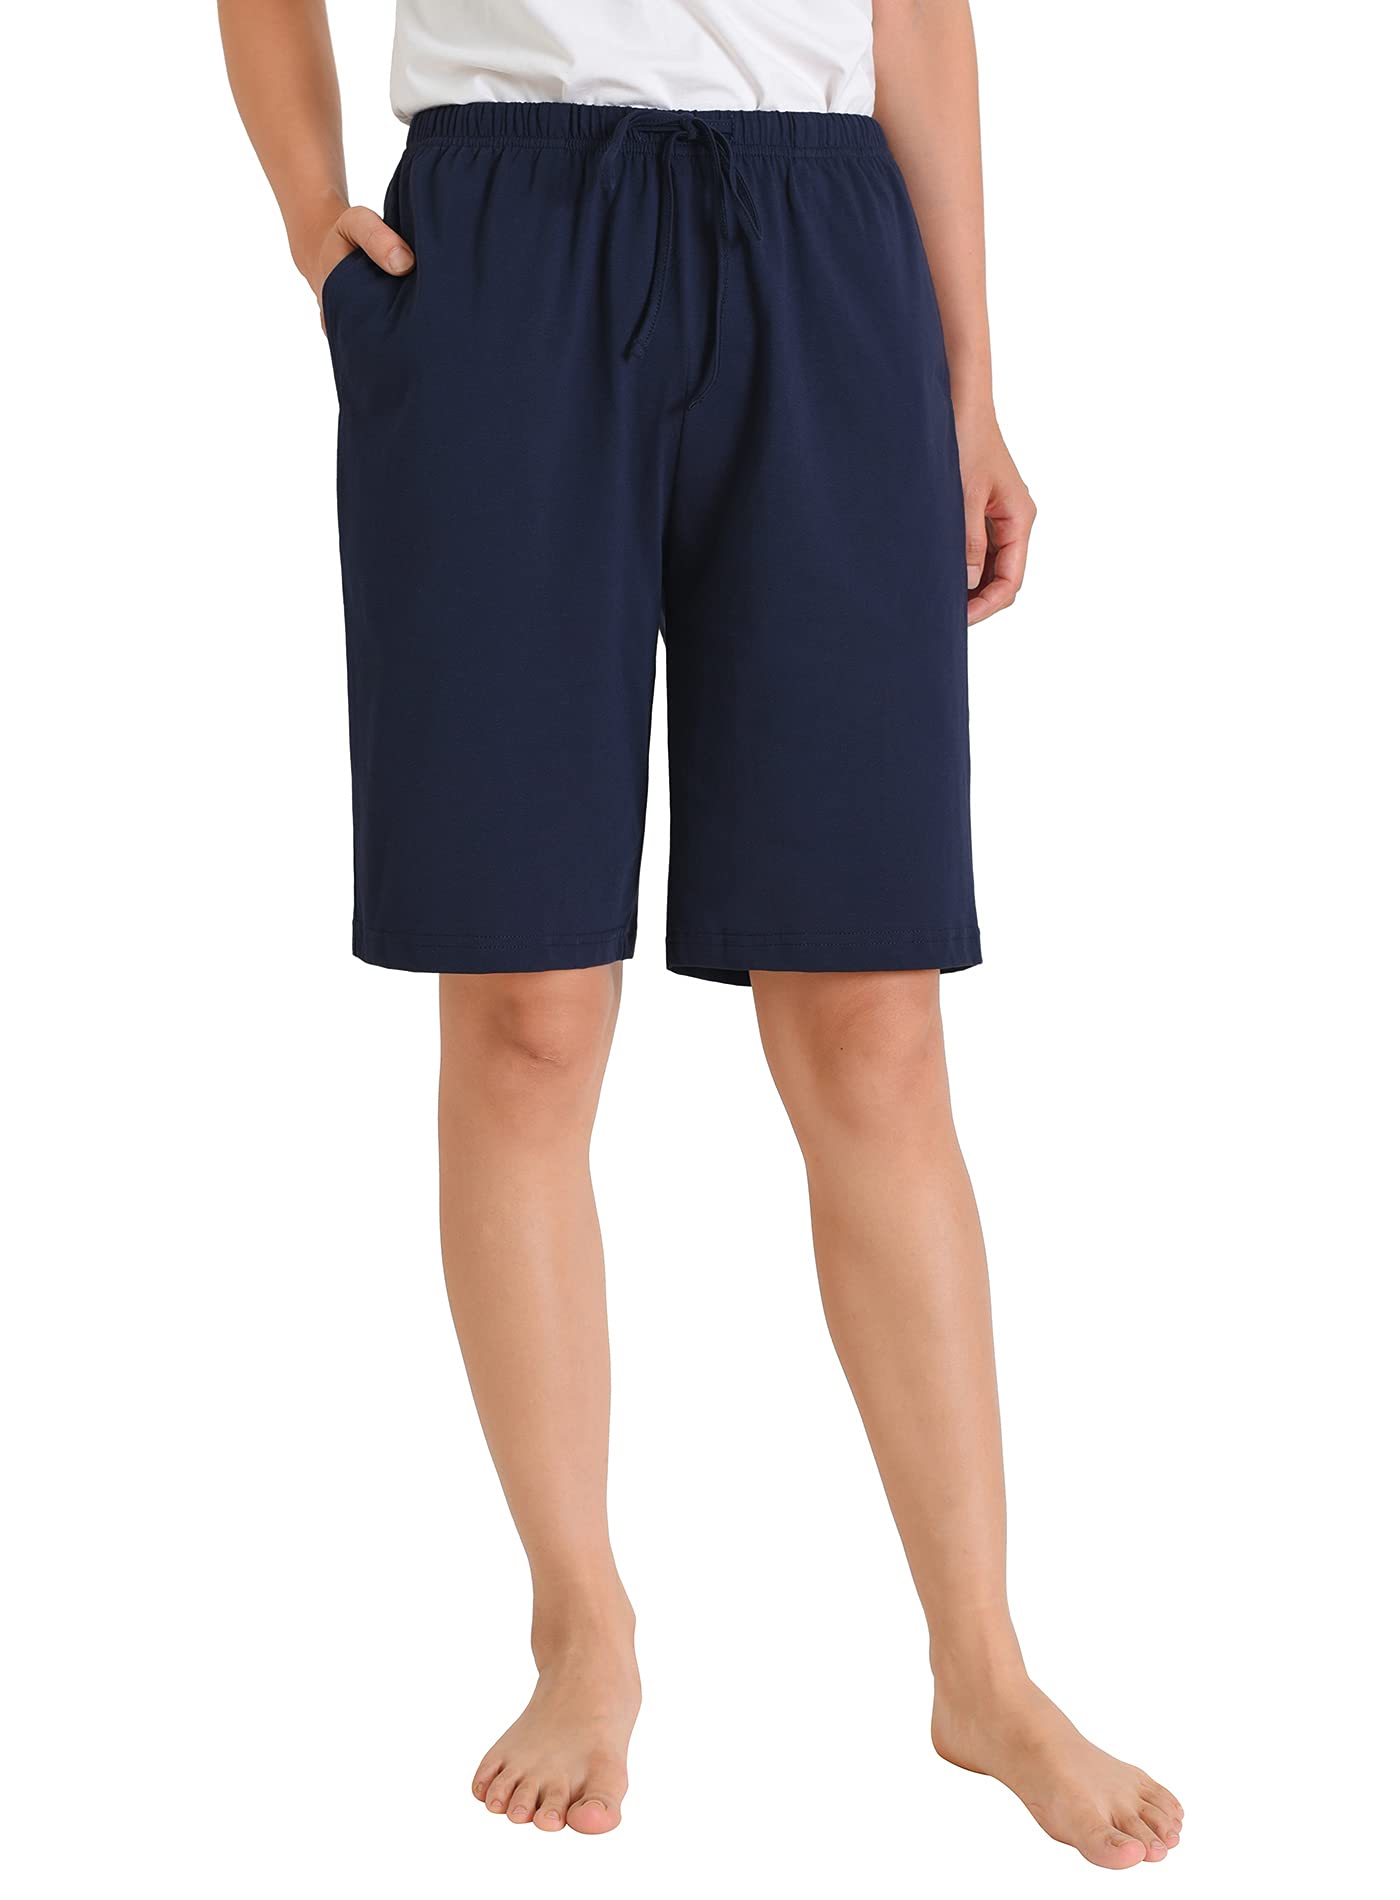 Women's Cotton Pajama Shorts Knit Lounge Shorts with Pockets